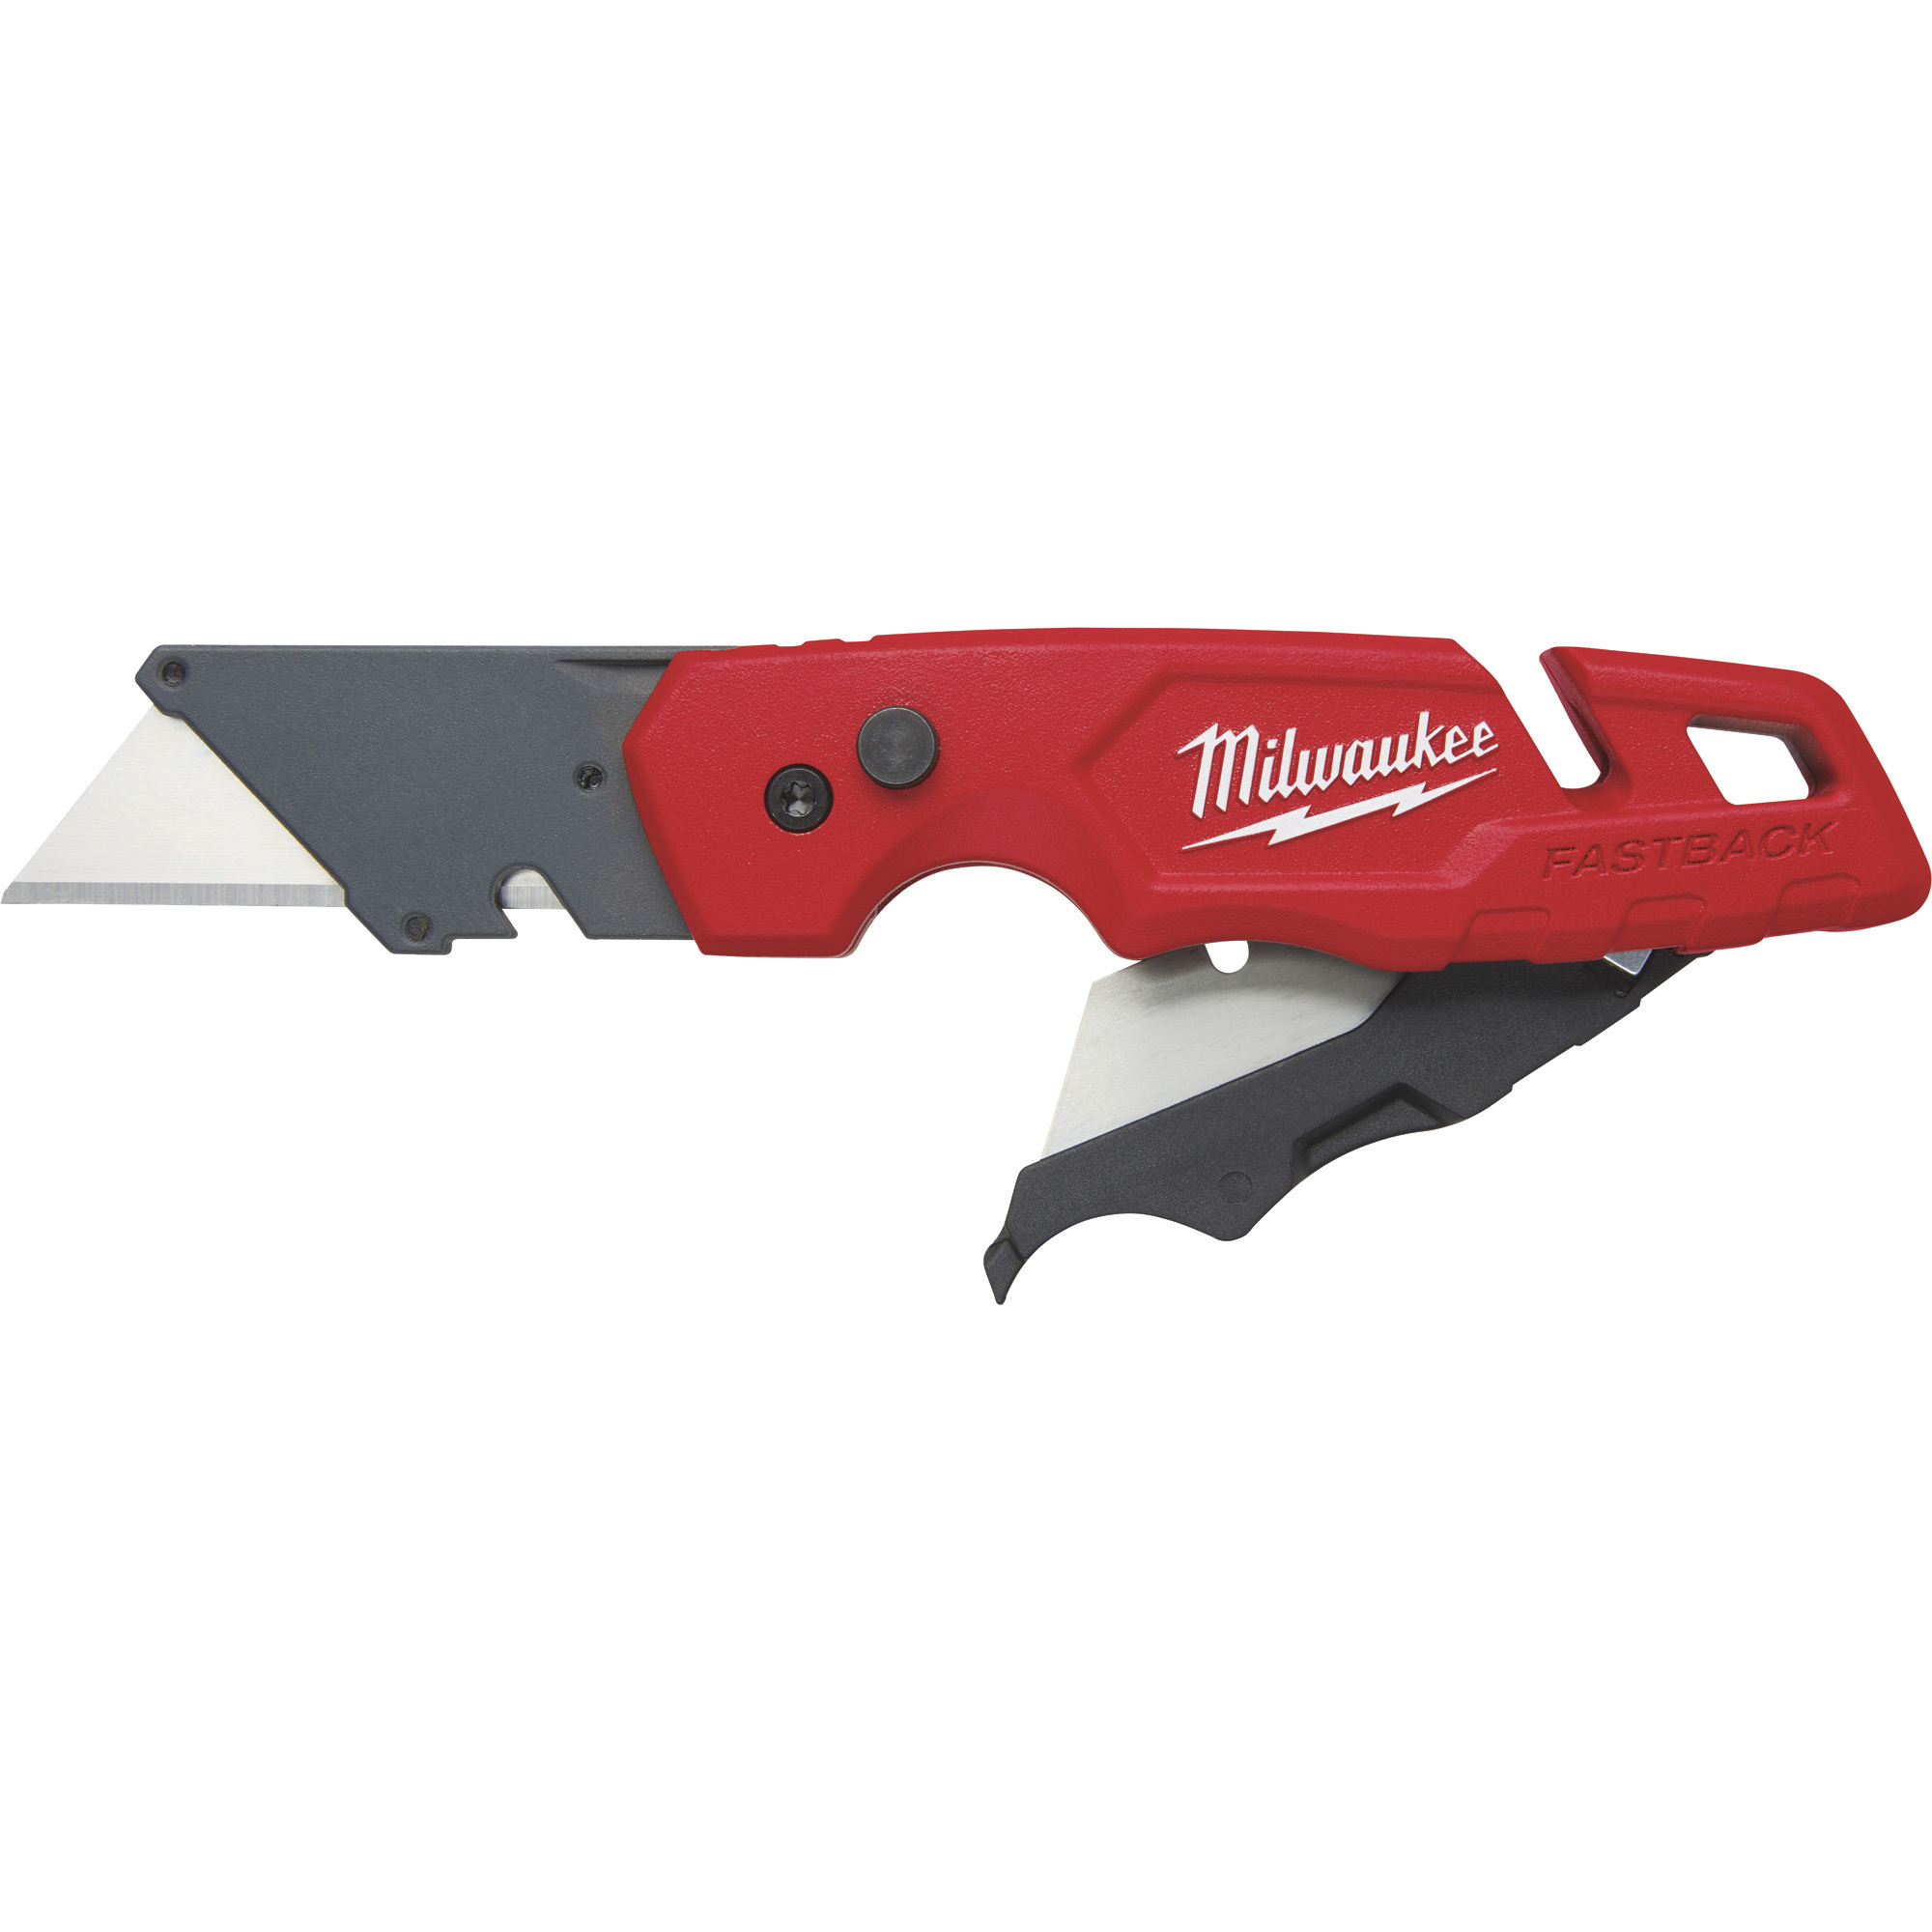 Milwaukee Fastback Folding Utility Knife, Model 48-22-1502